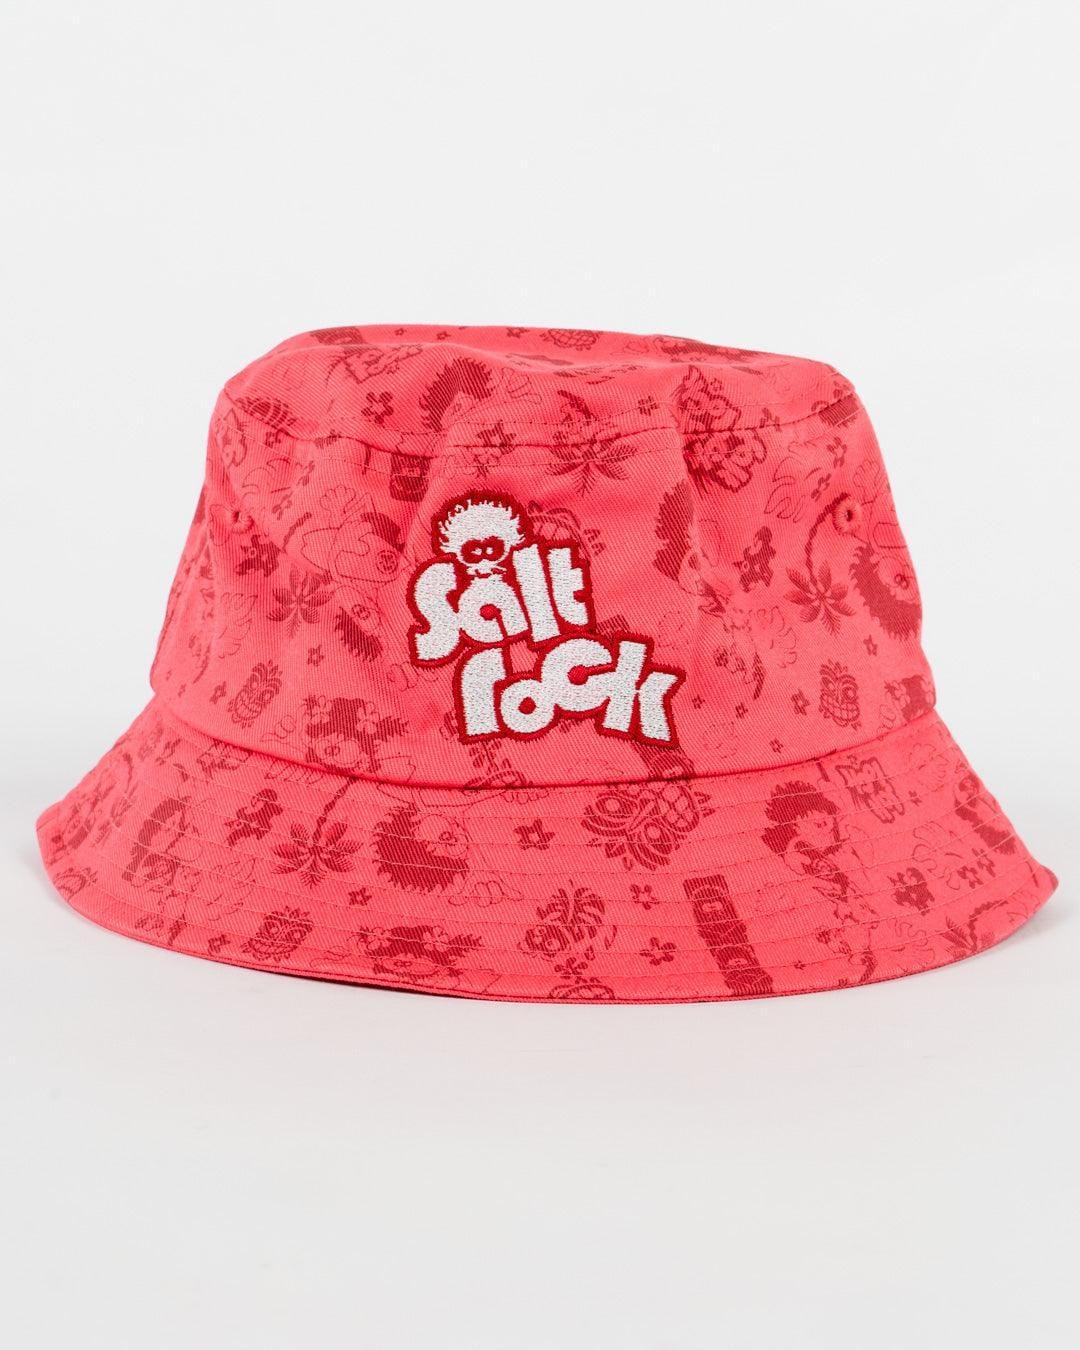 Tiki Tok - Kids Bucket Hat - Red